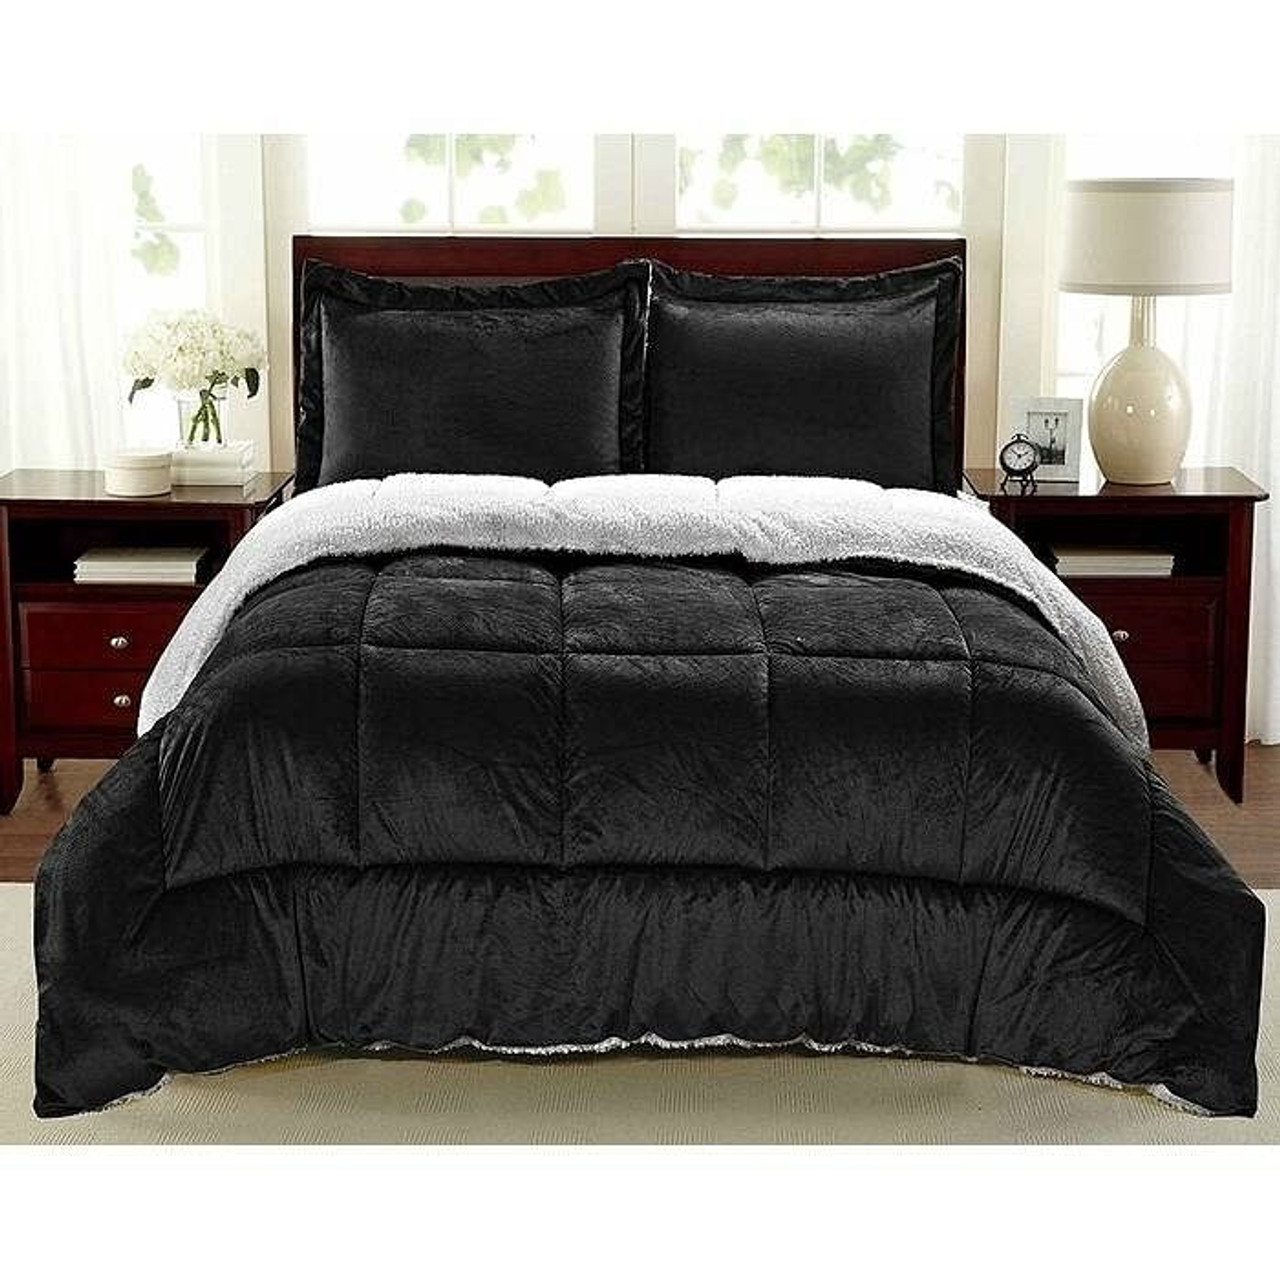 Twin Size 2 Piece Ultra Soft Sherpa Wrinkle Resistant Comforter Set in Black